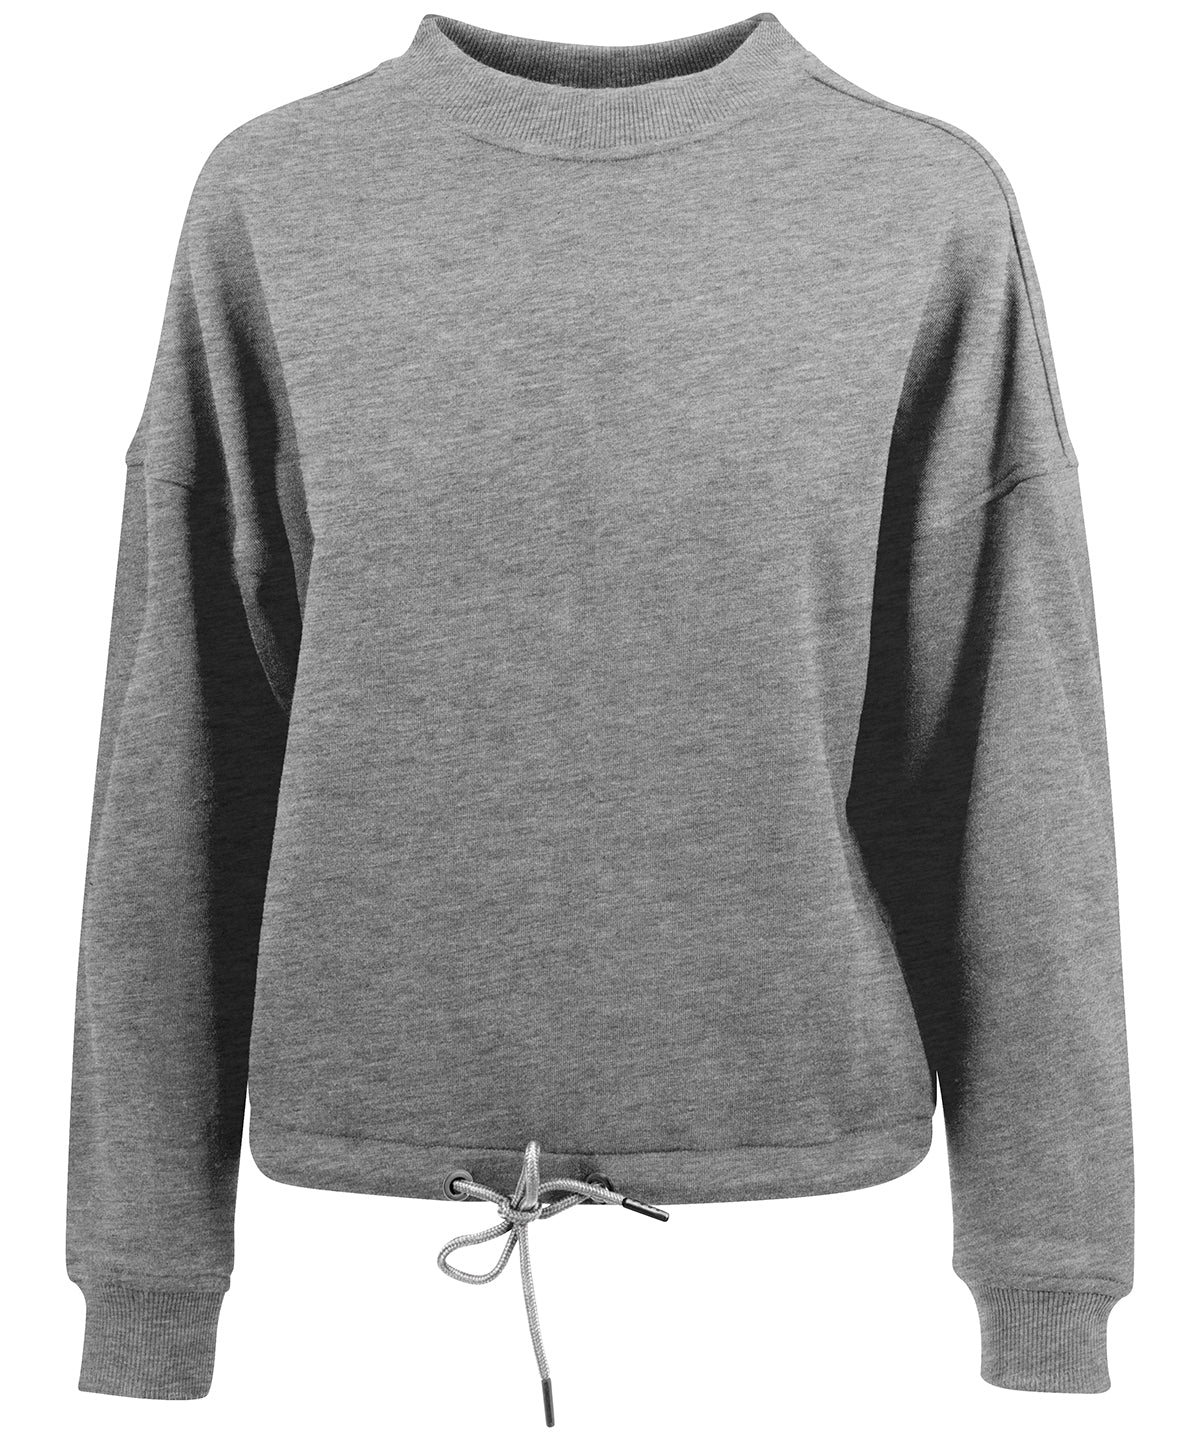 Personalised Sweatshirts - Black Build Your Brand Women's oversize crew neck